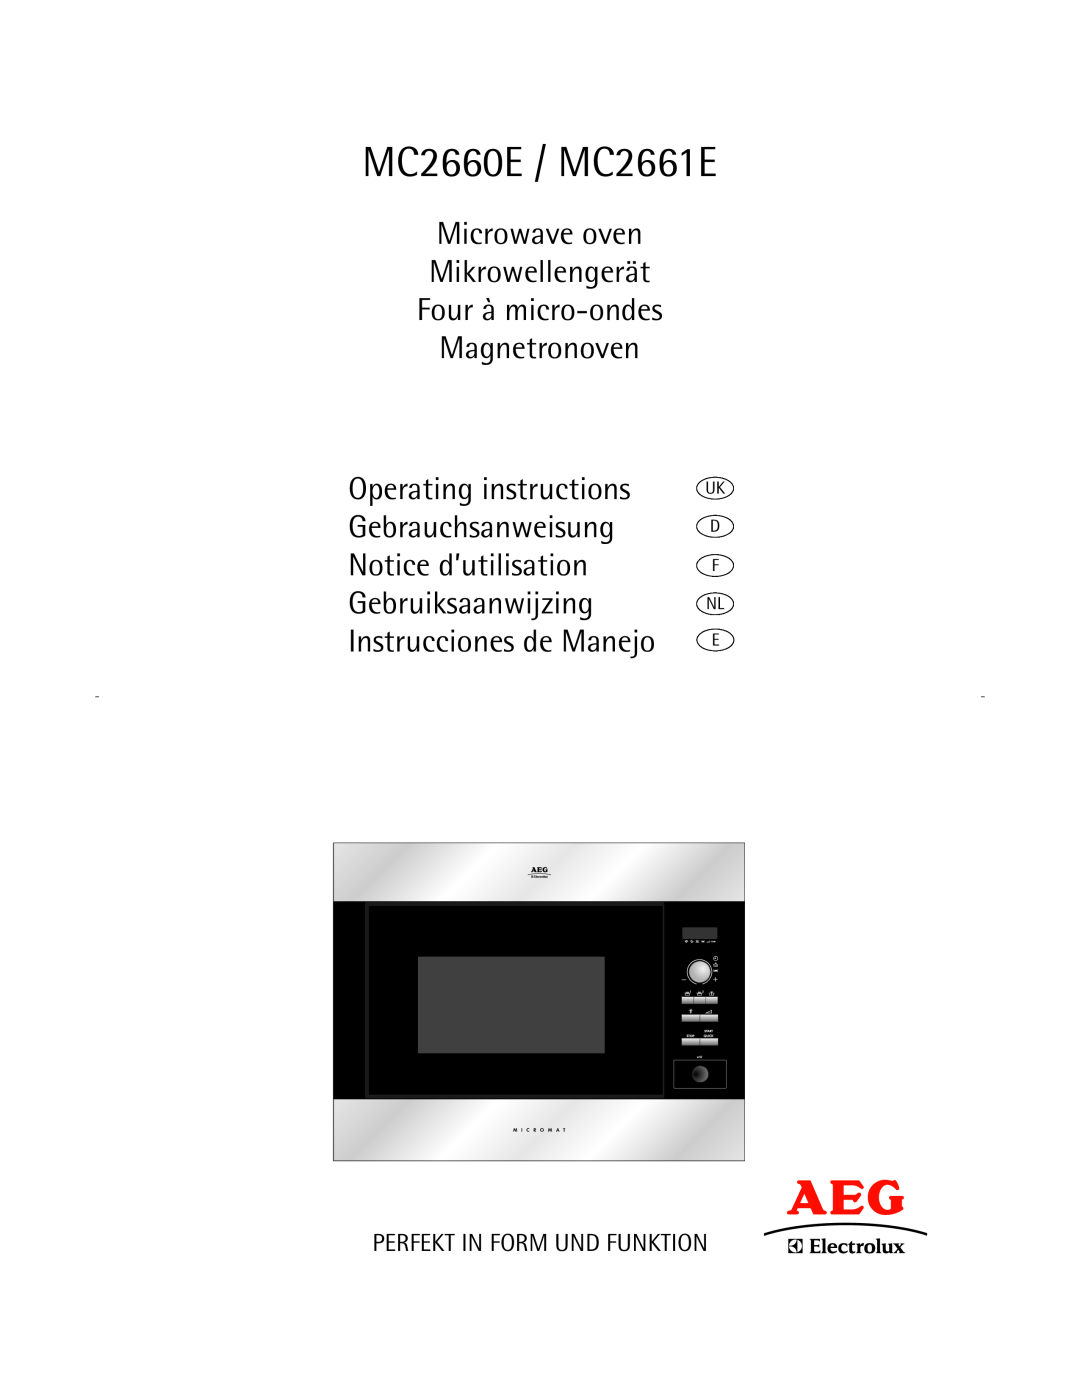 AEG manual MC2660E / MC2661E, Microwave oven Mikrowellengerät, Four à micro-ondes Magnetronoven 